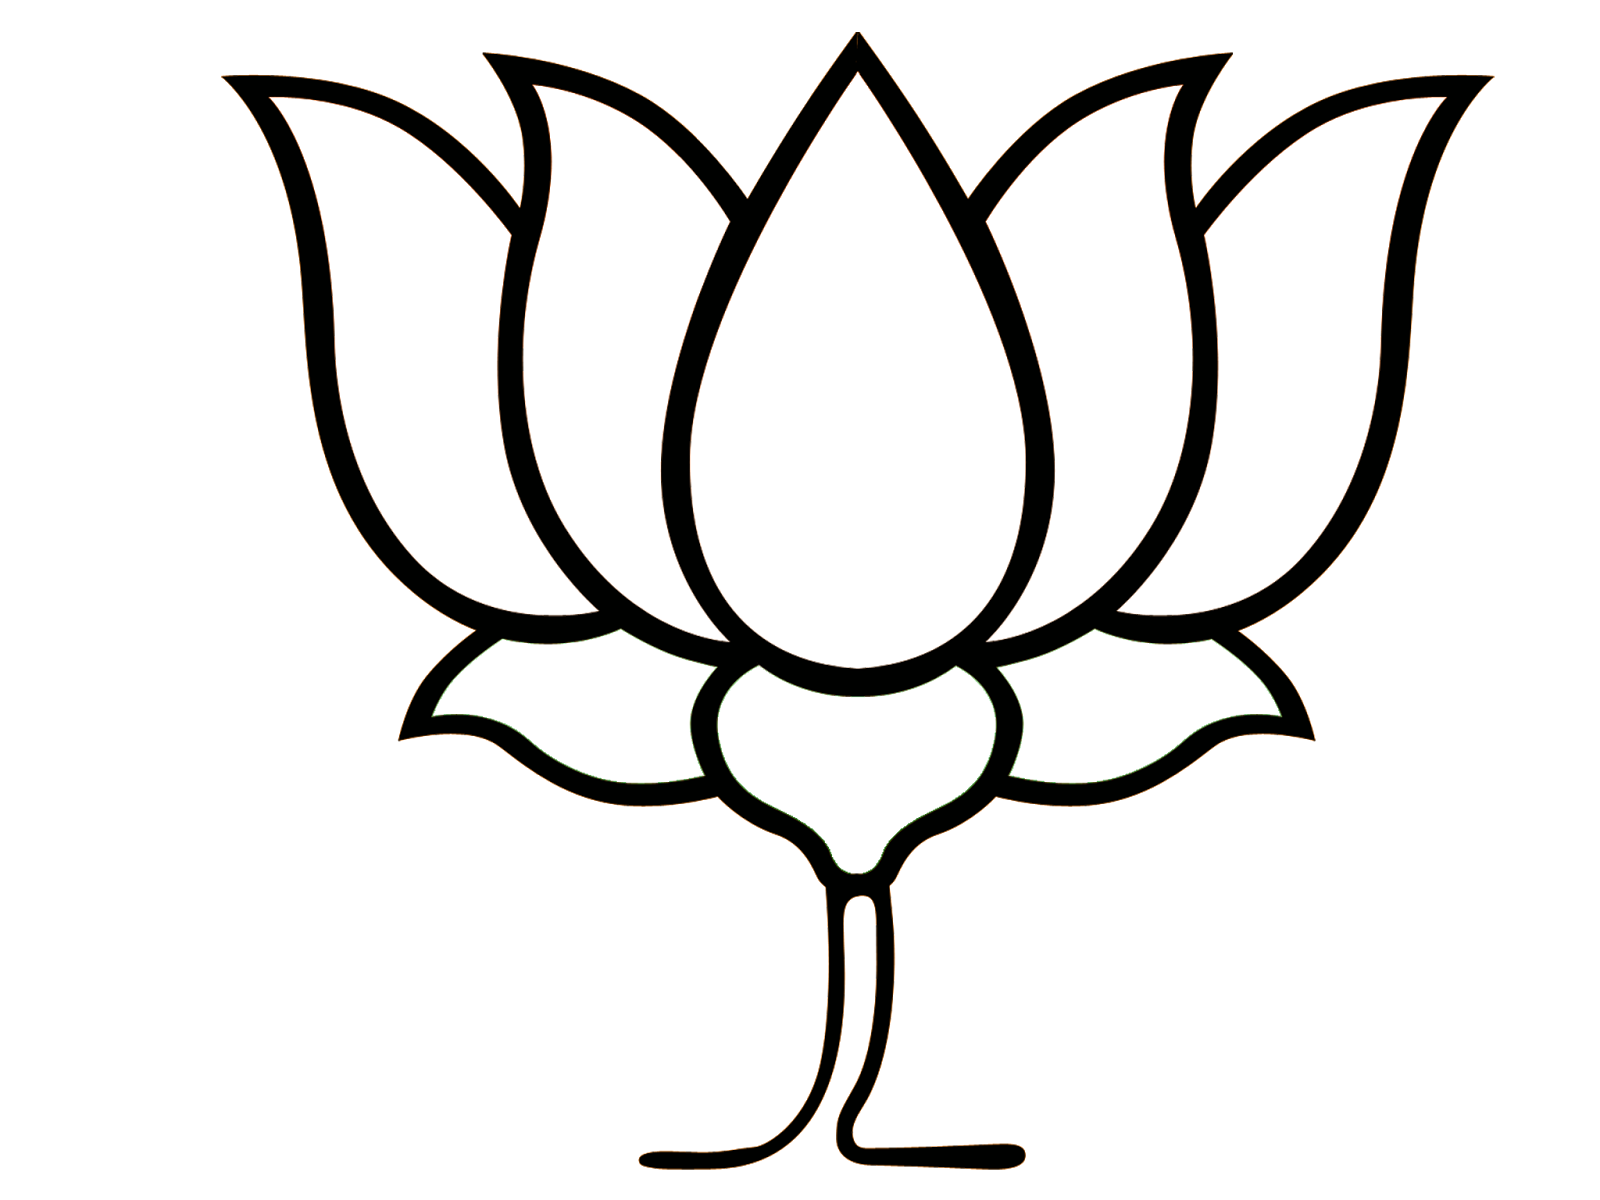 Bharitya Janata Party